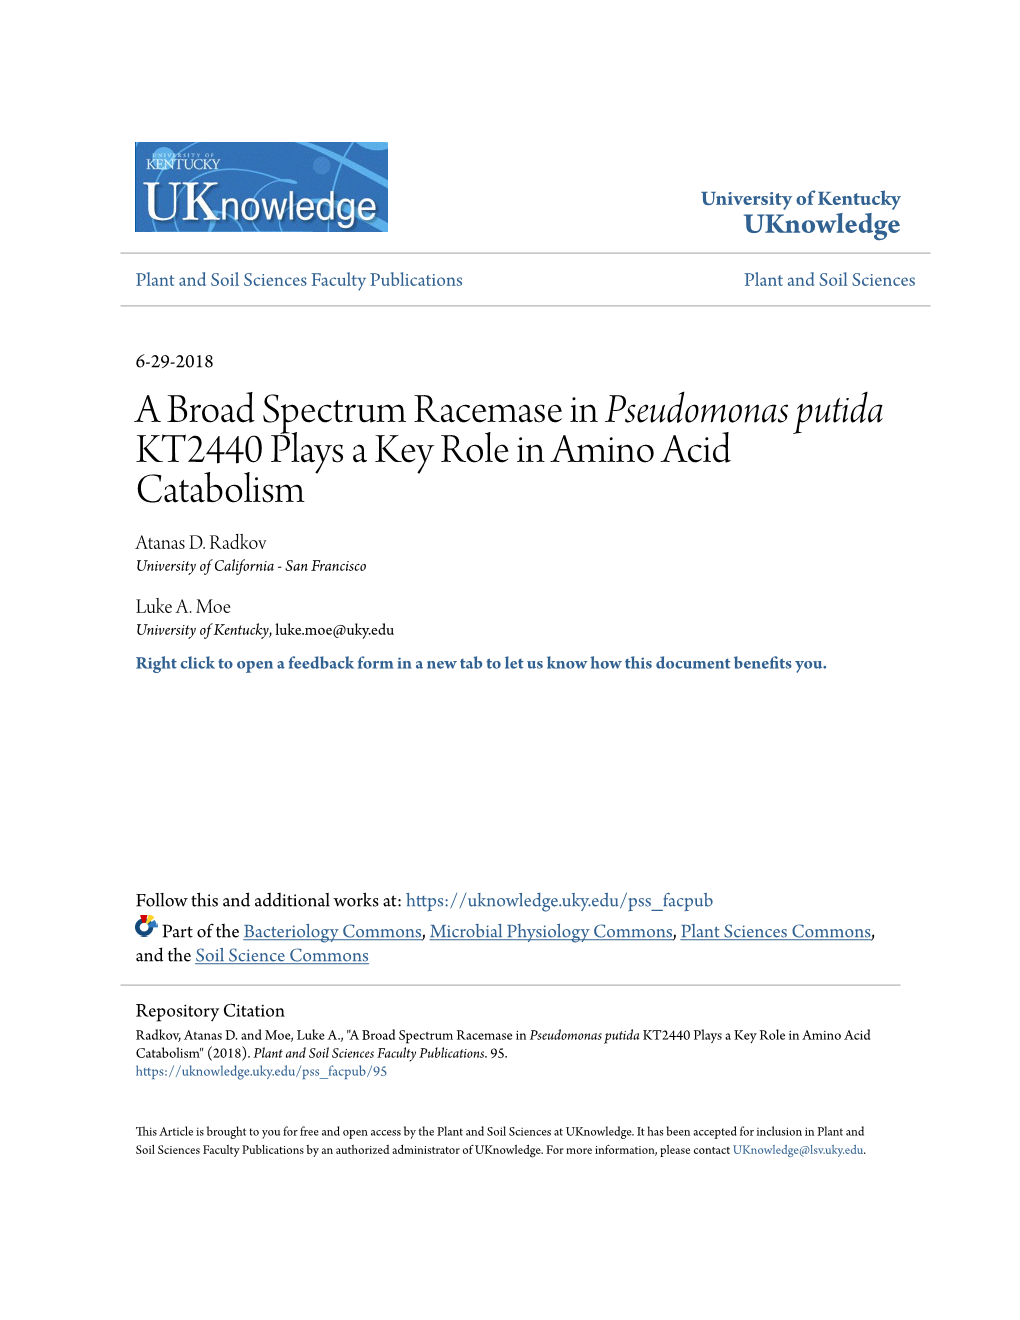 A Broad Spectrum Racemase in Pseudomonas Putida KT2440 Plays a Key Role in Amino Acid Catabolism Atanas D